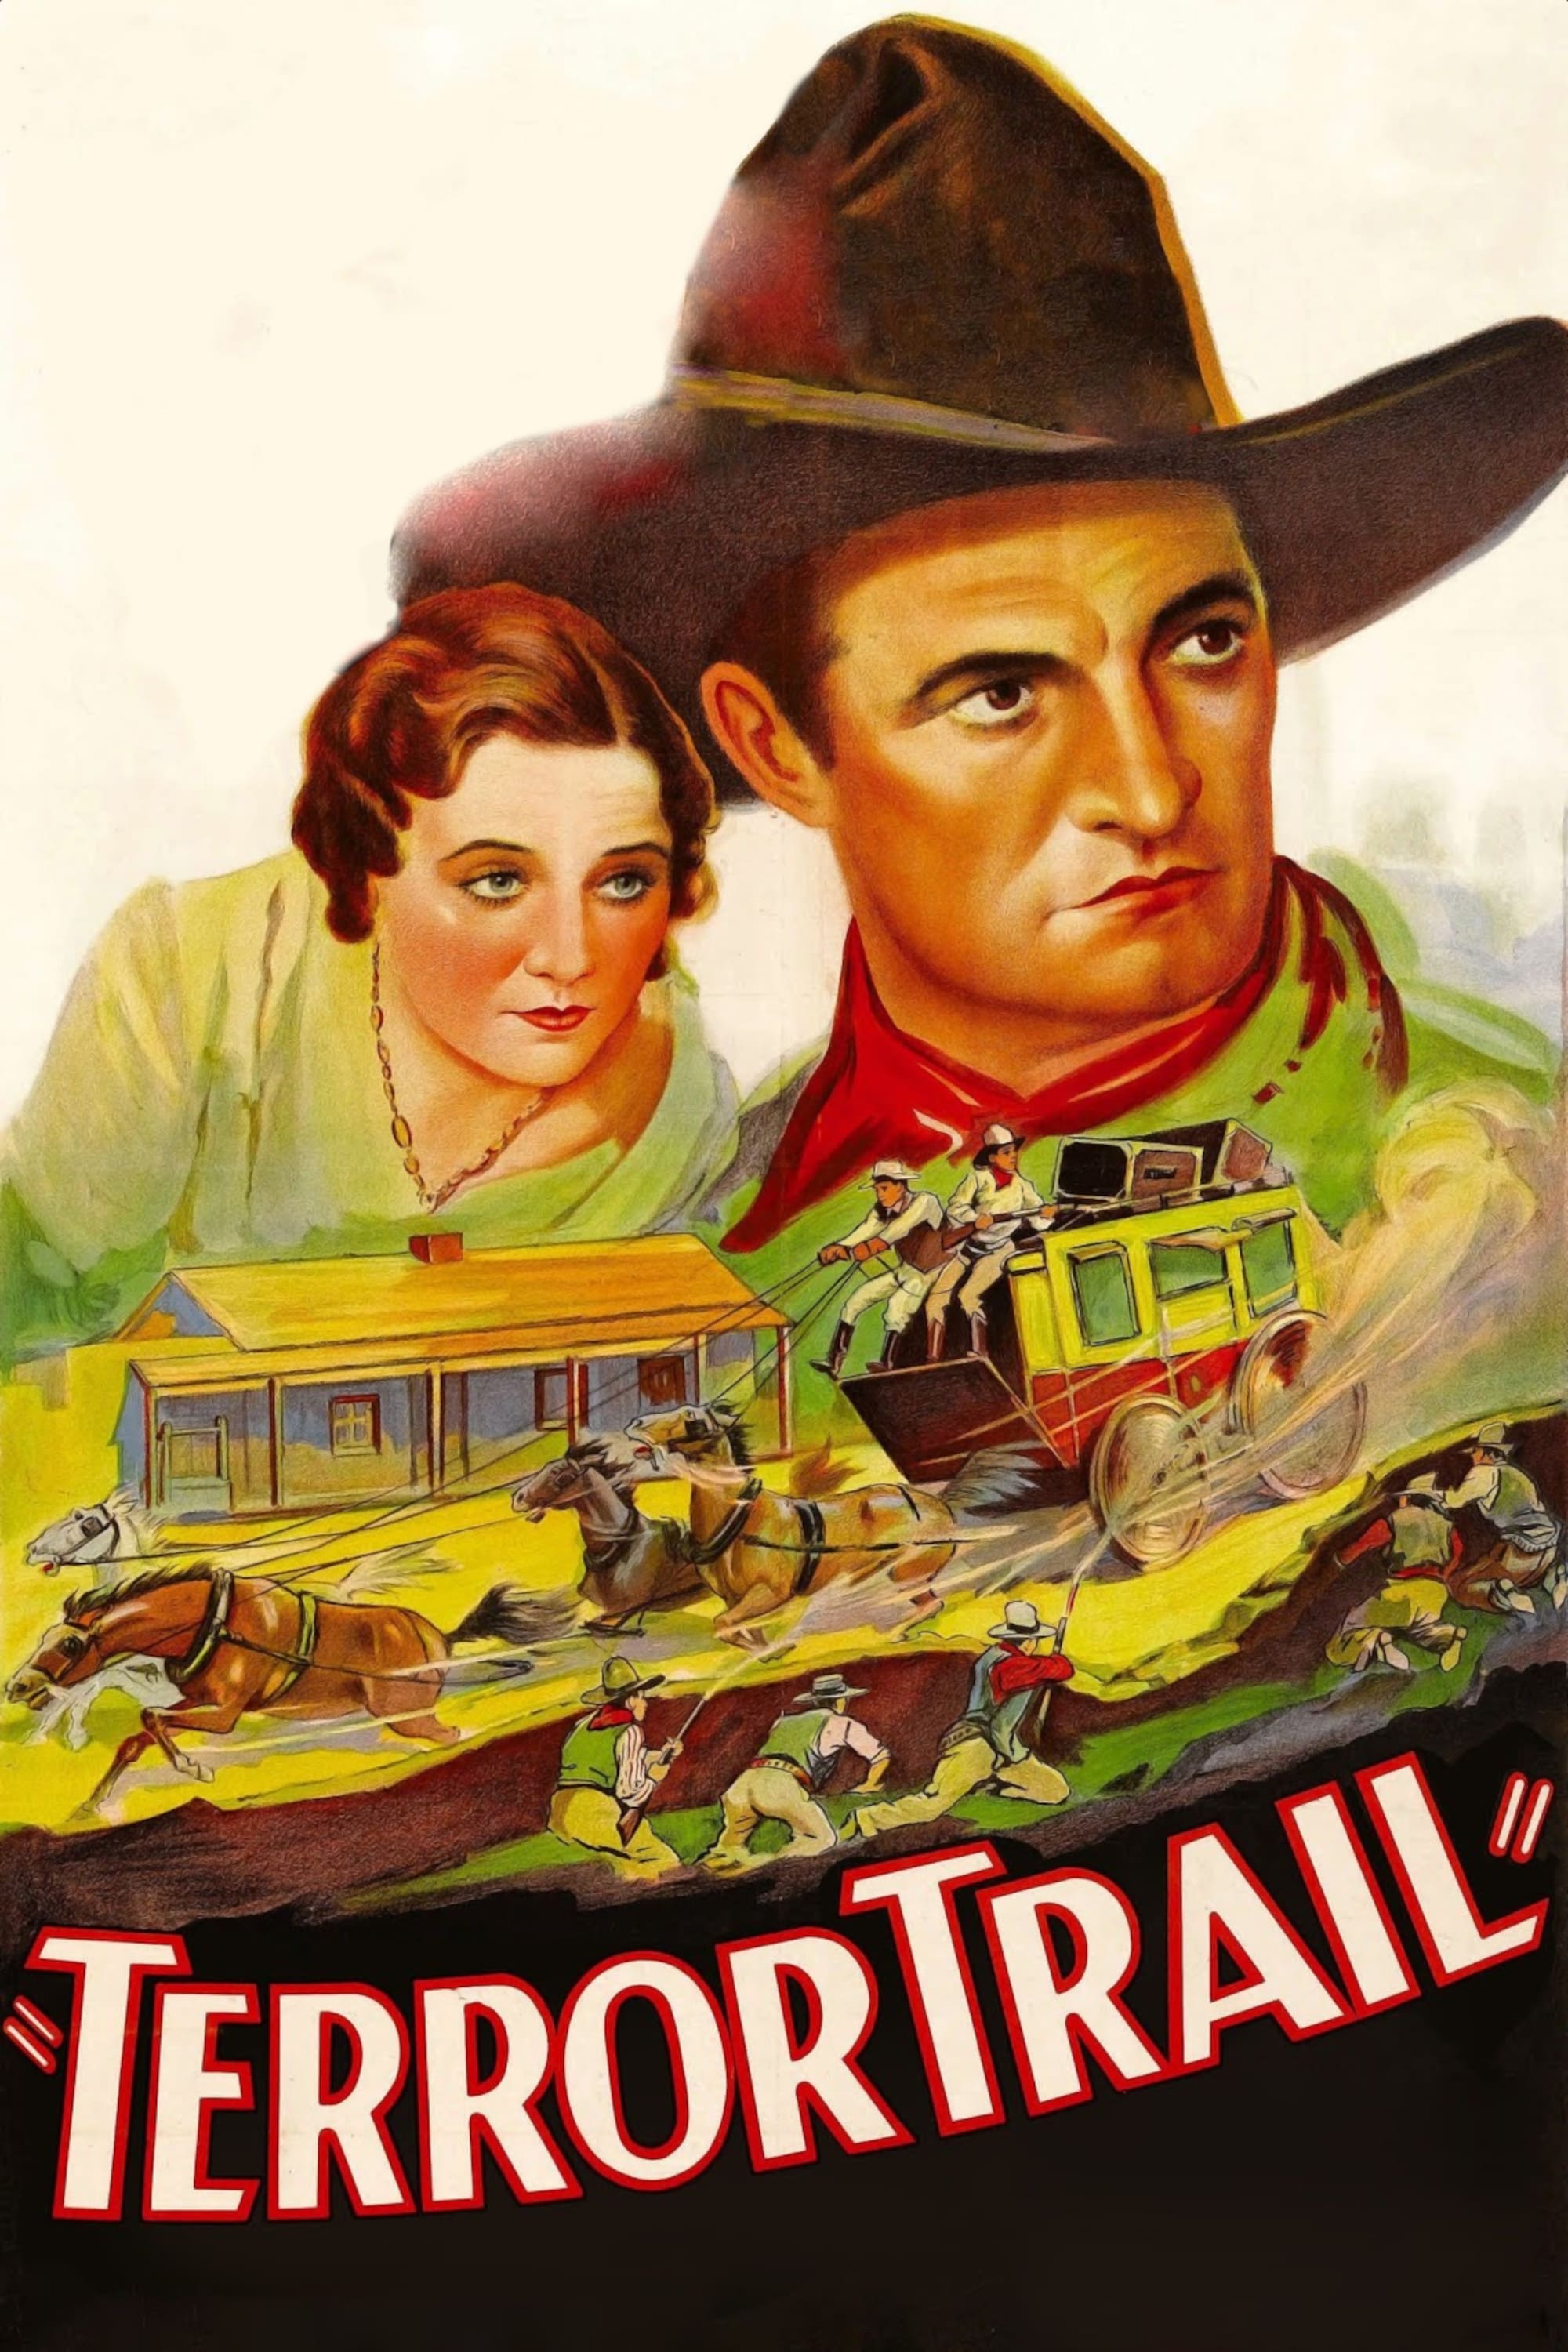 Terror Trail (1933)